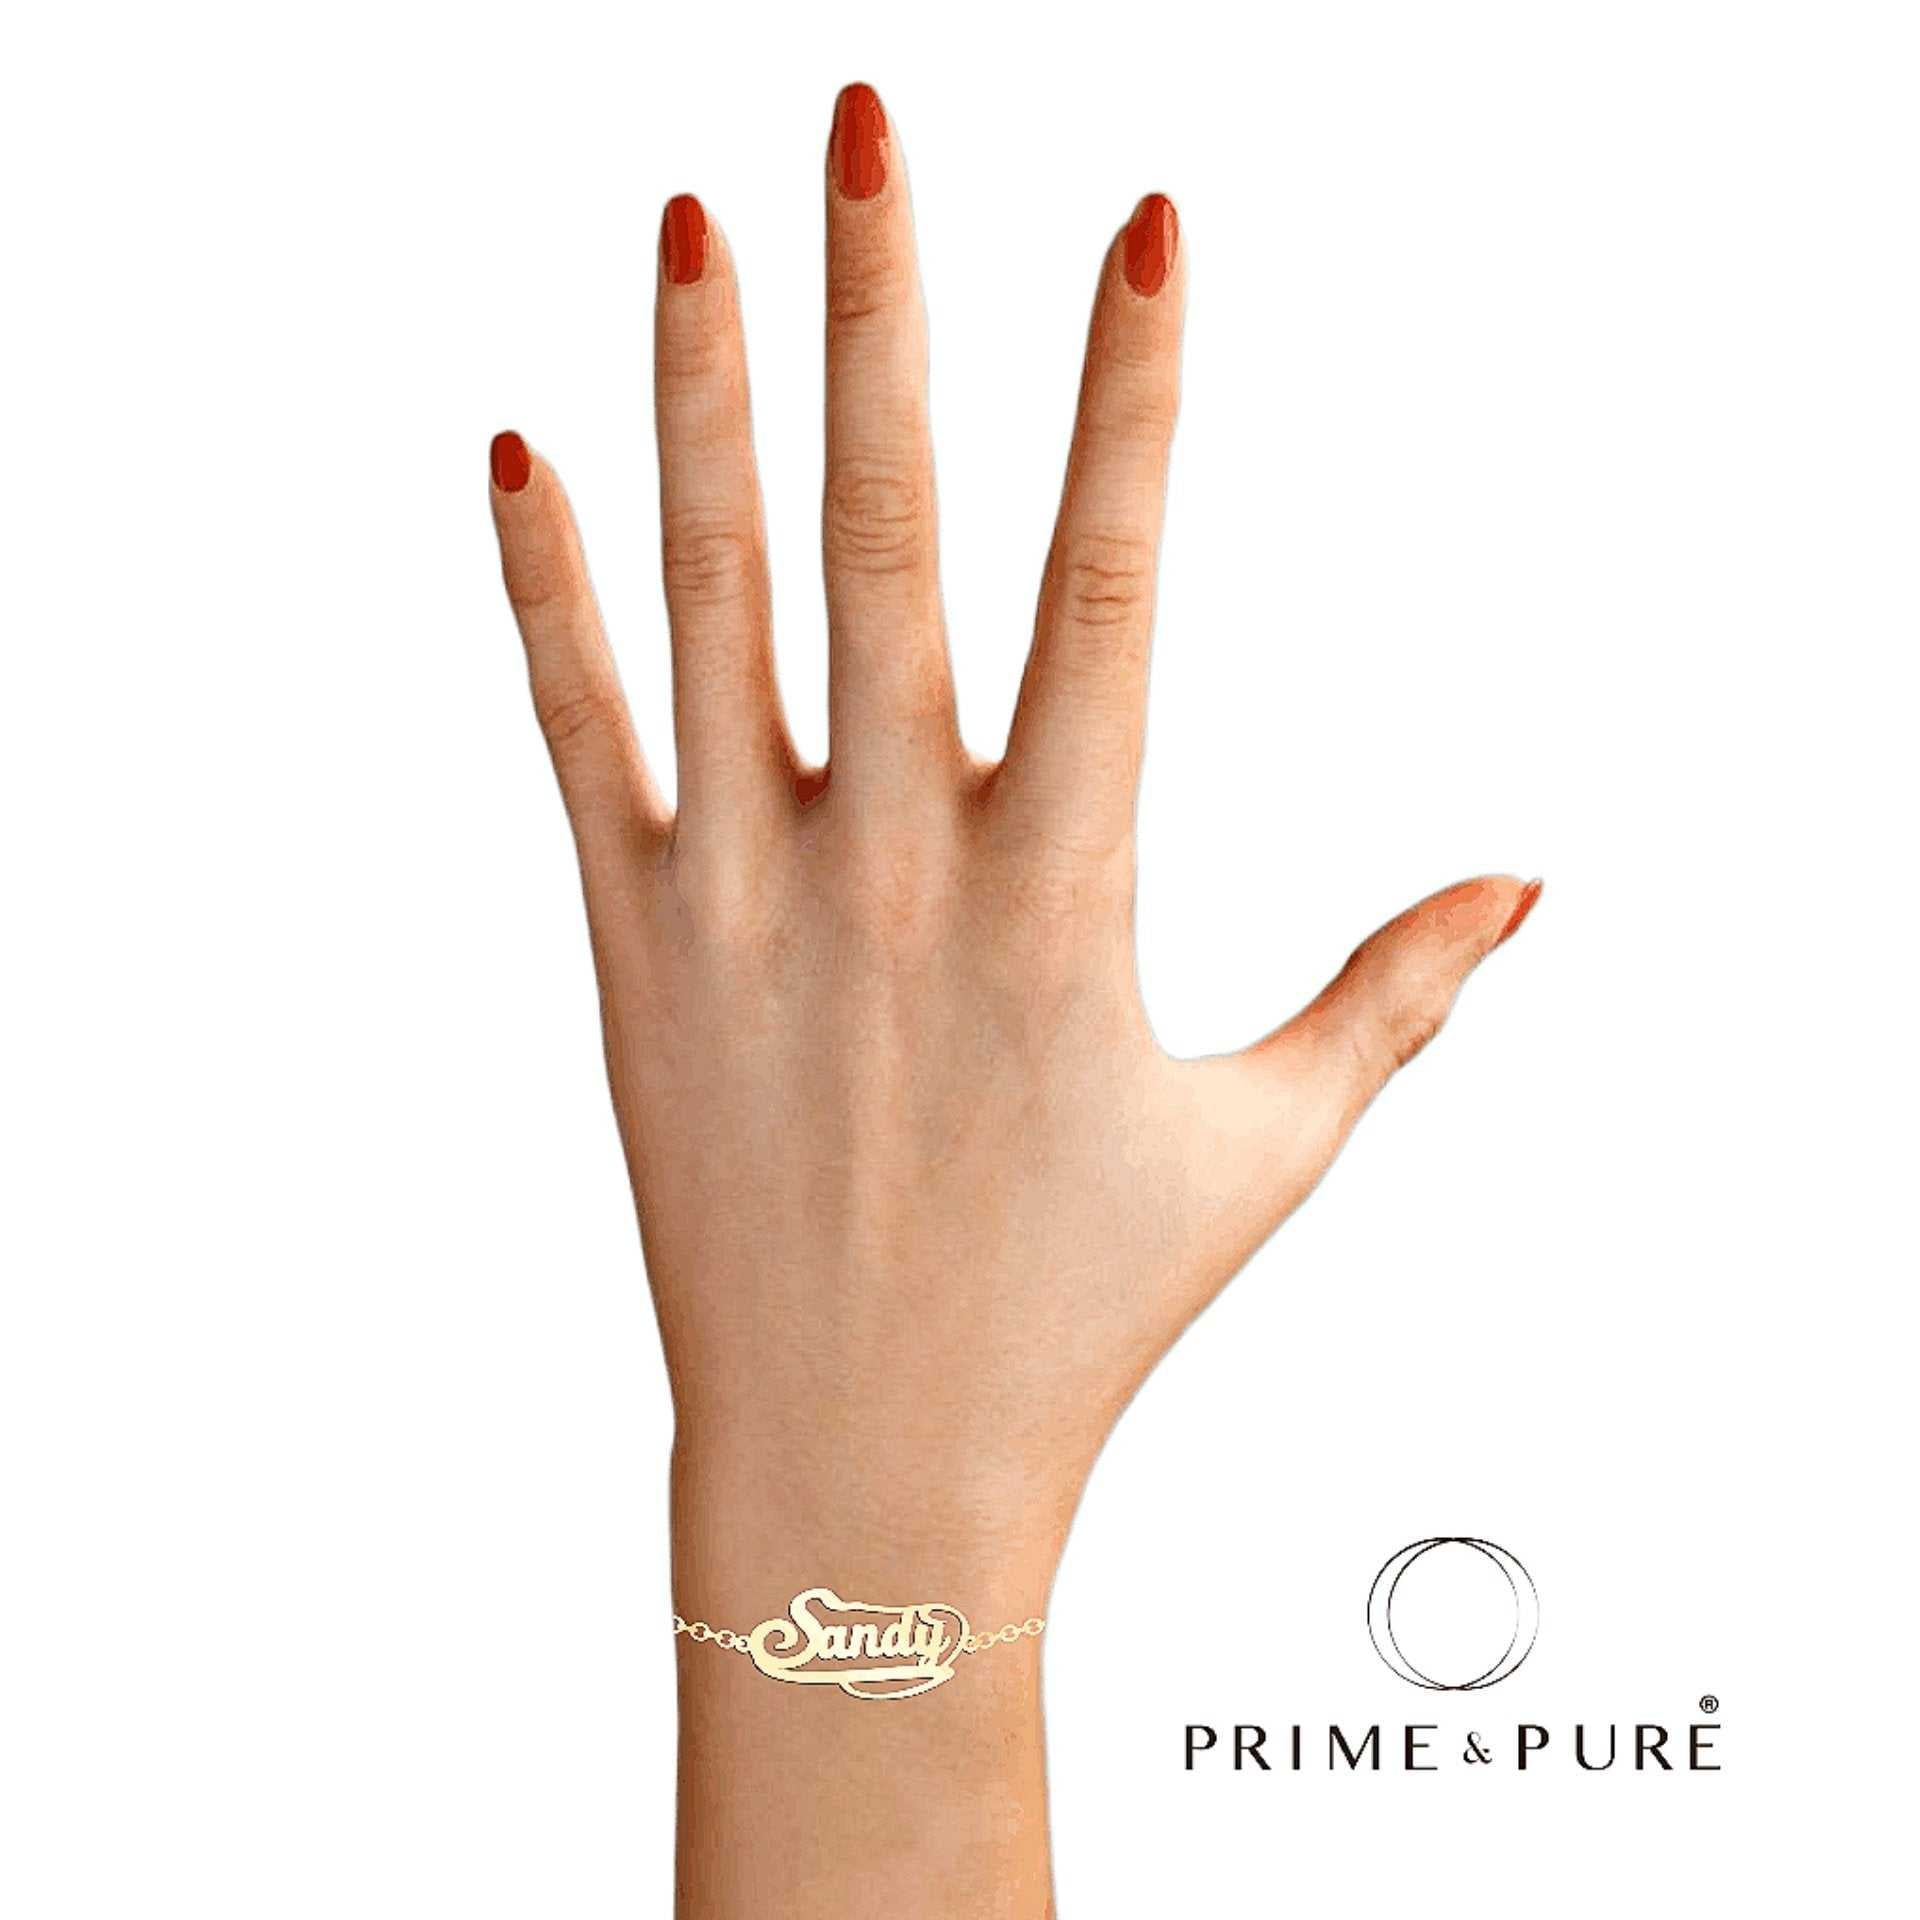 Signature Name Bracelet - Prime & Pure